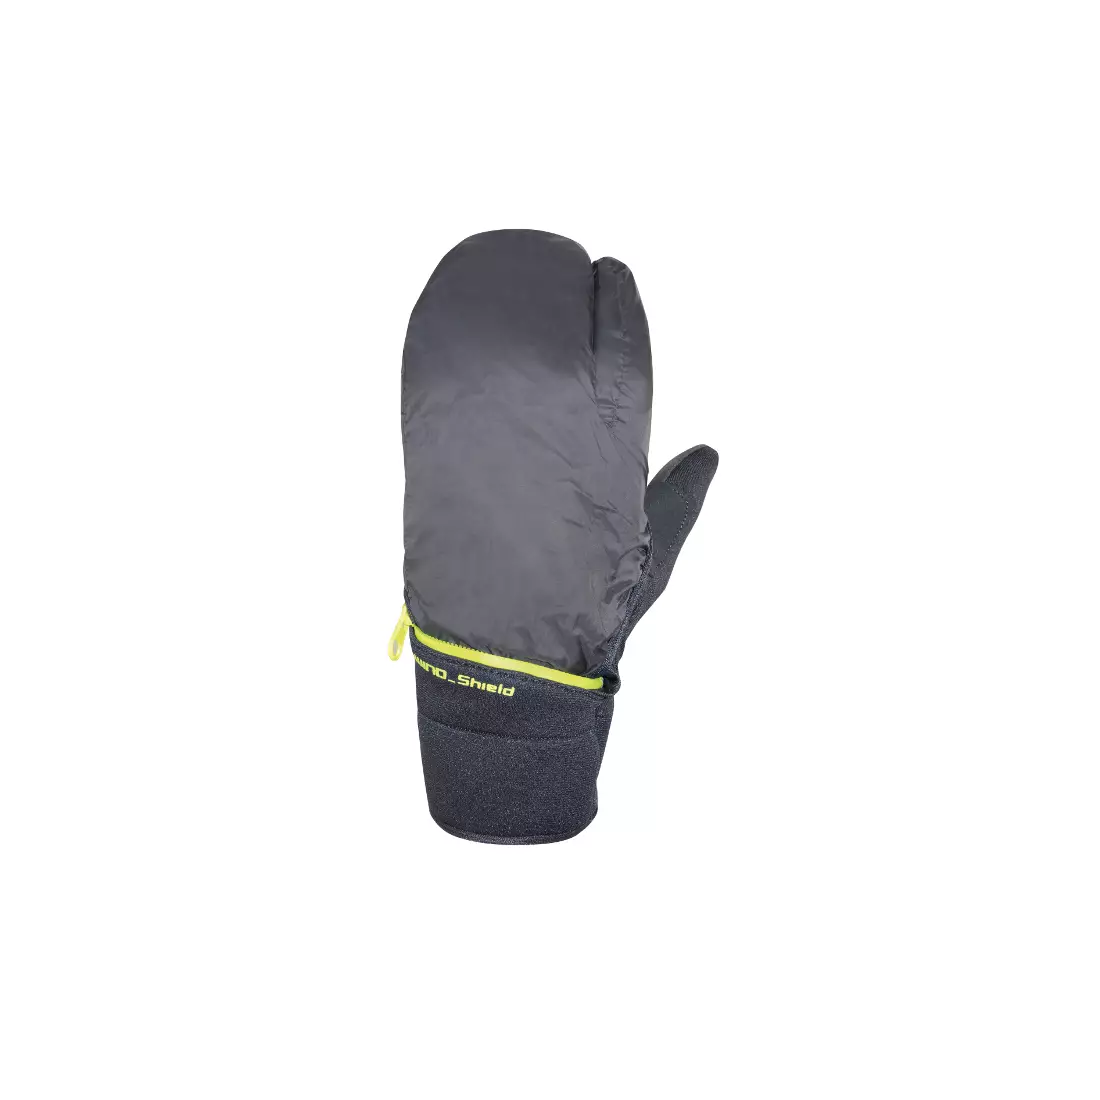 CHIBA OVERFLAP zimné rukavice s poťahom, čierna 31158